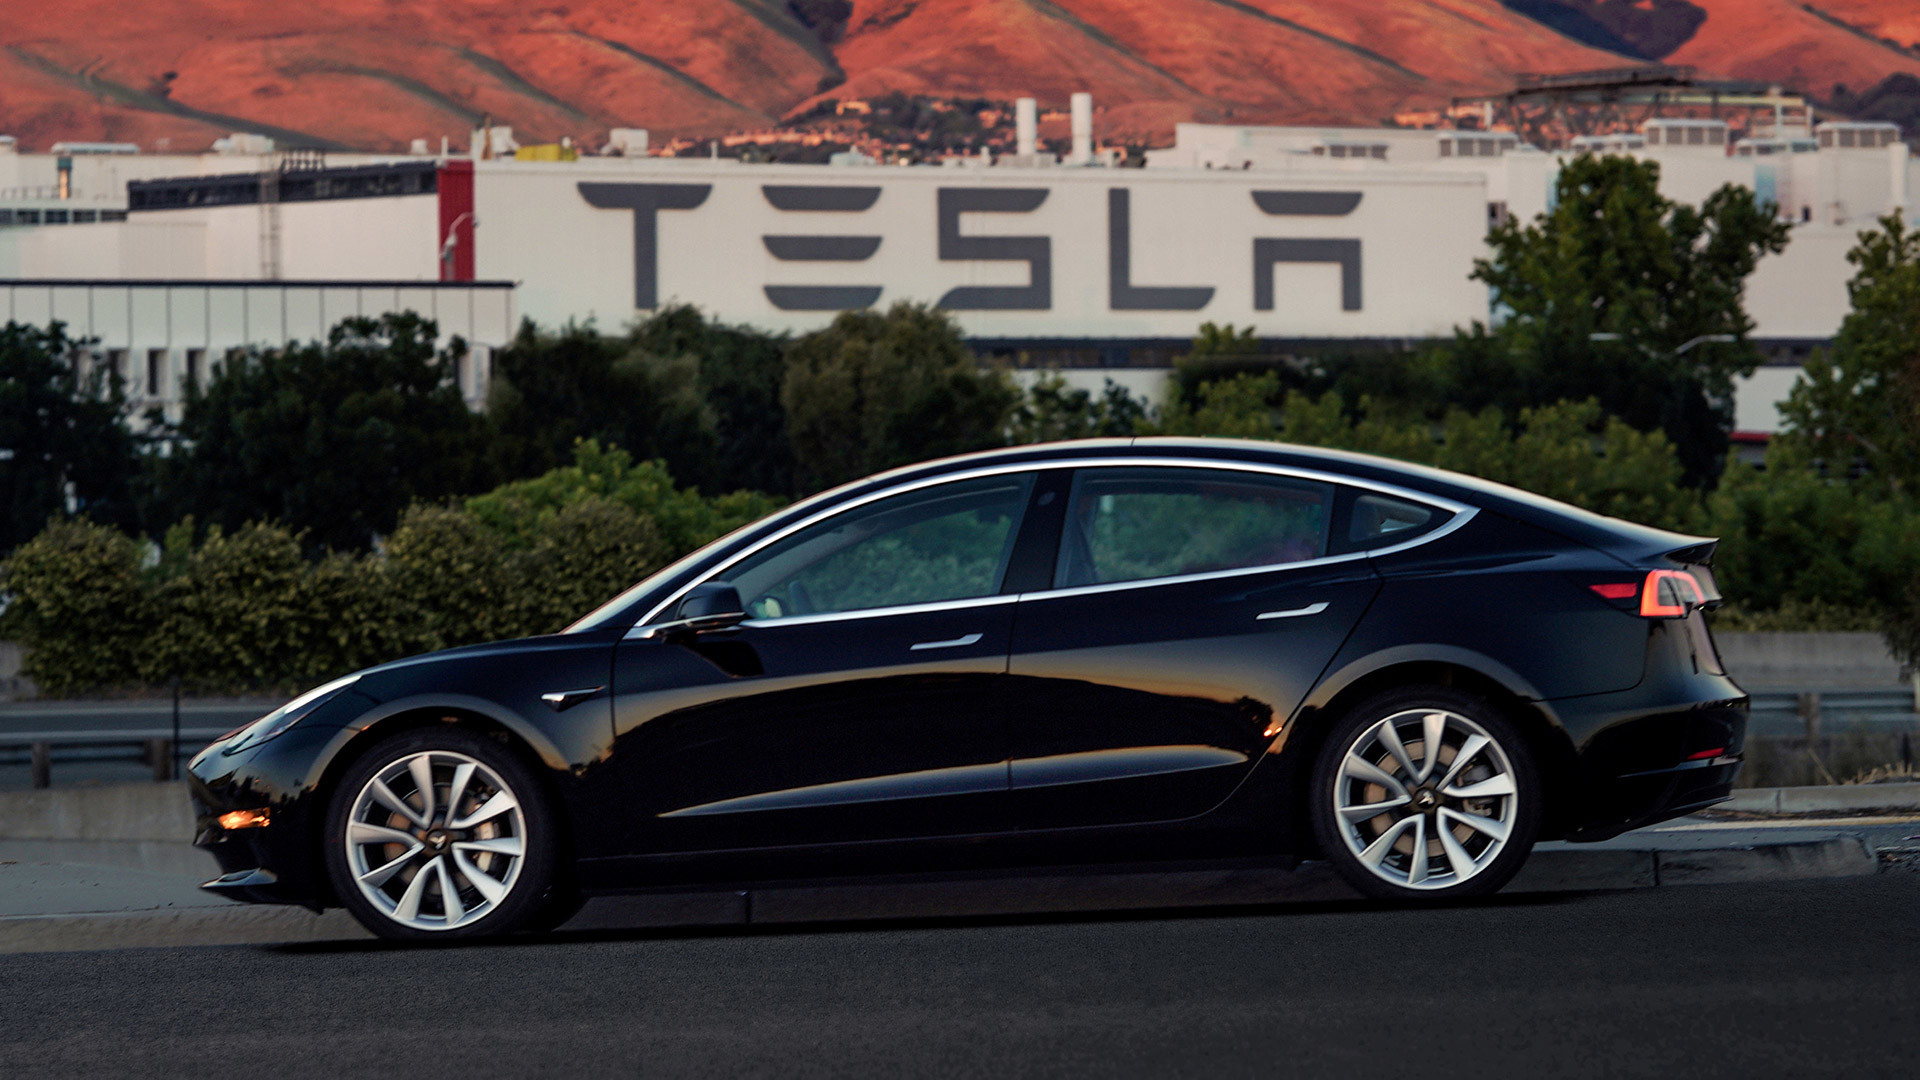 Фото © Tesla/Handout via REUTERS